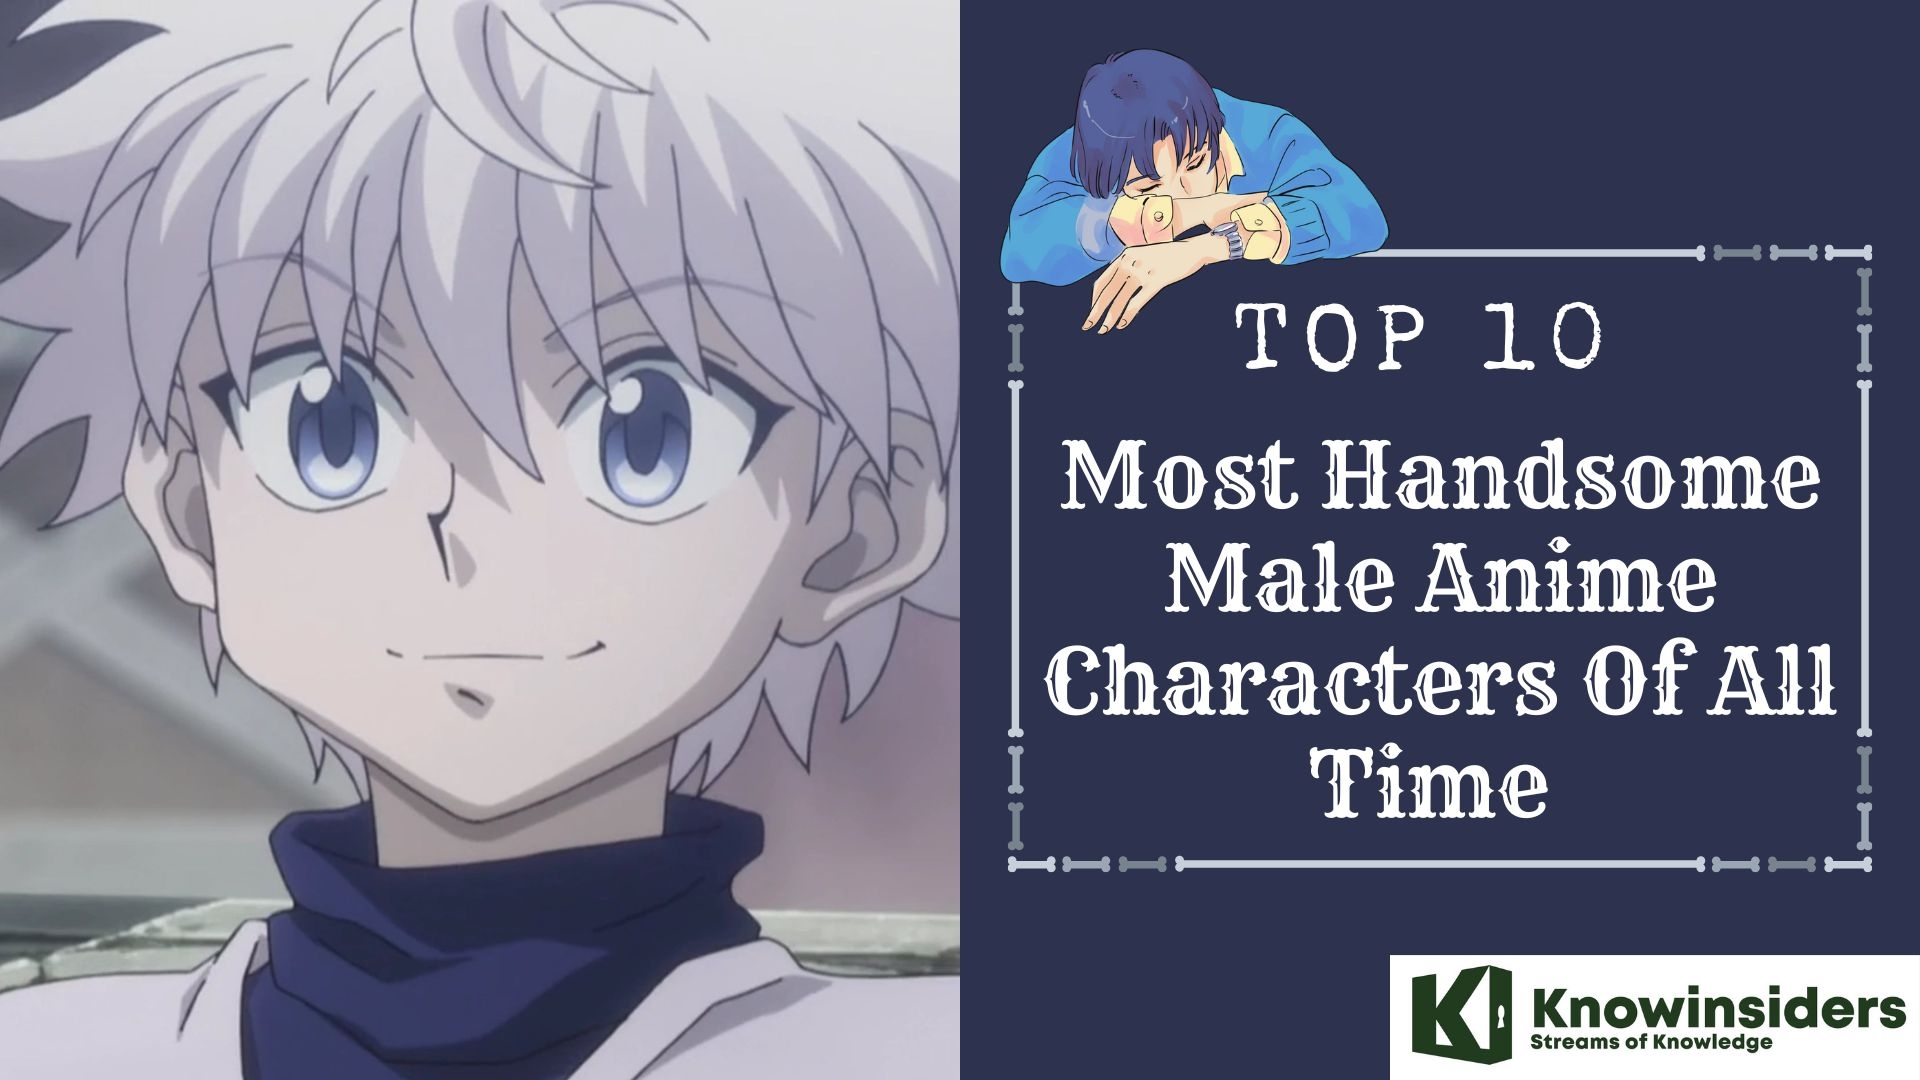 Bishounen 18 Most Handsome Male AnimeManga Characters Ever  Anime  Manga